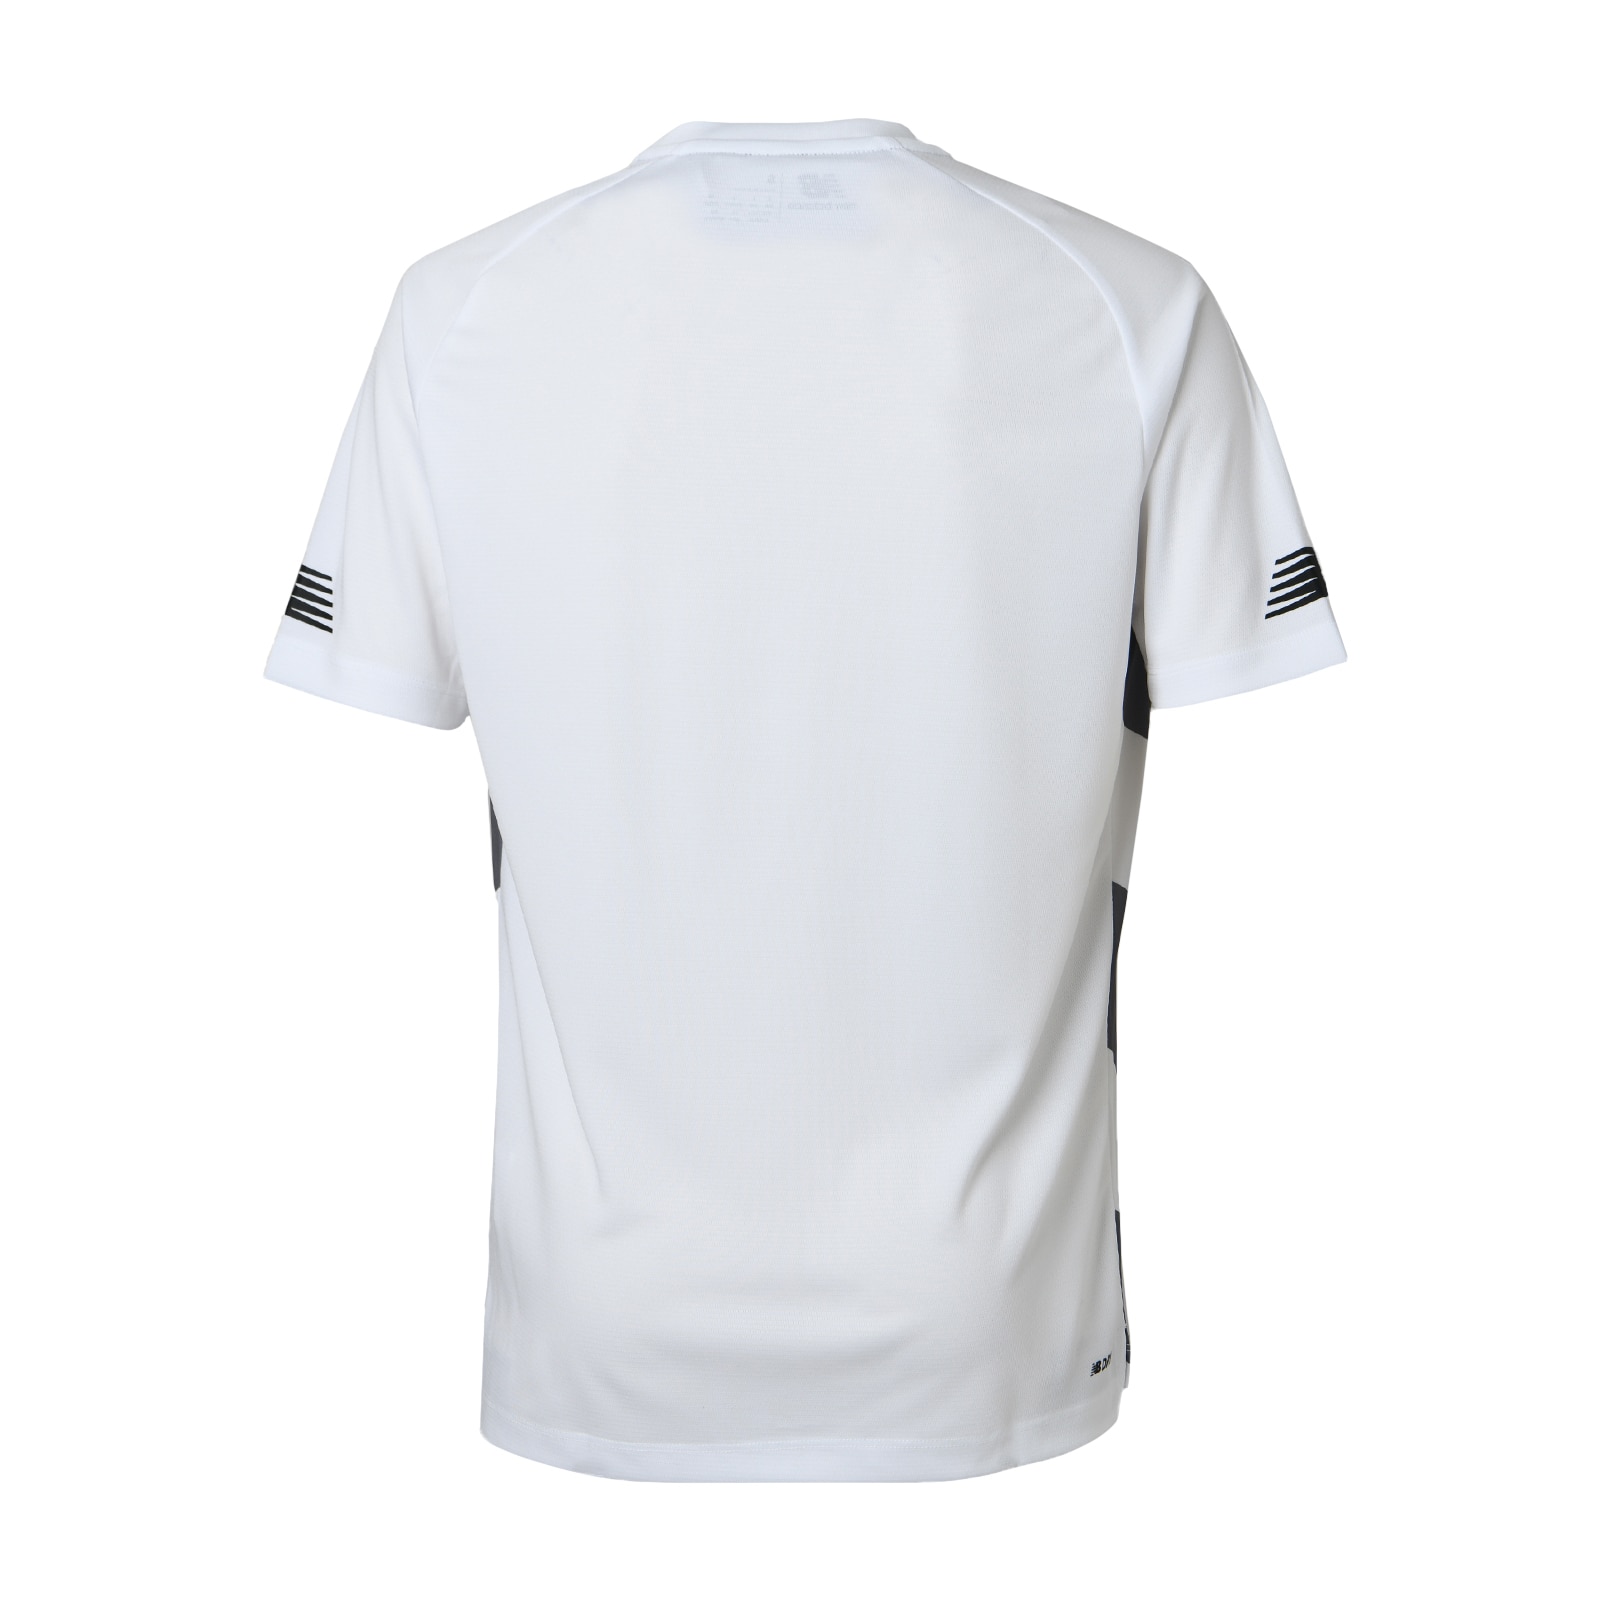 CHEVRON 2 Game Short Sleeve Shirt